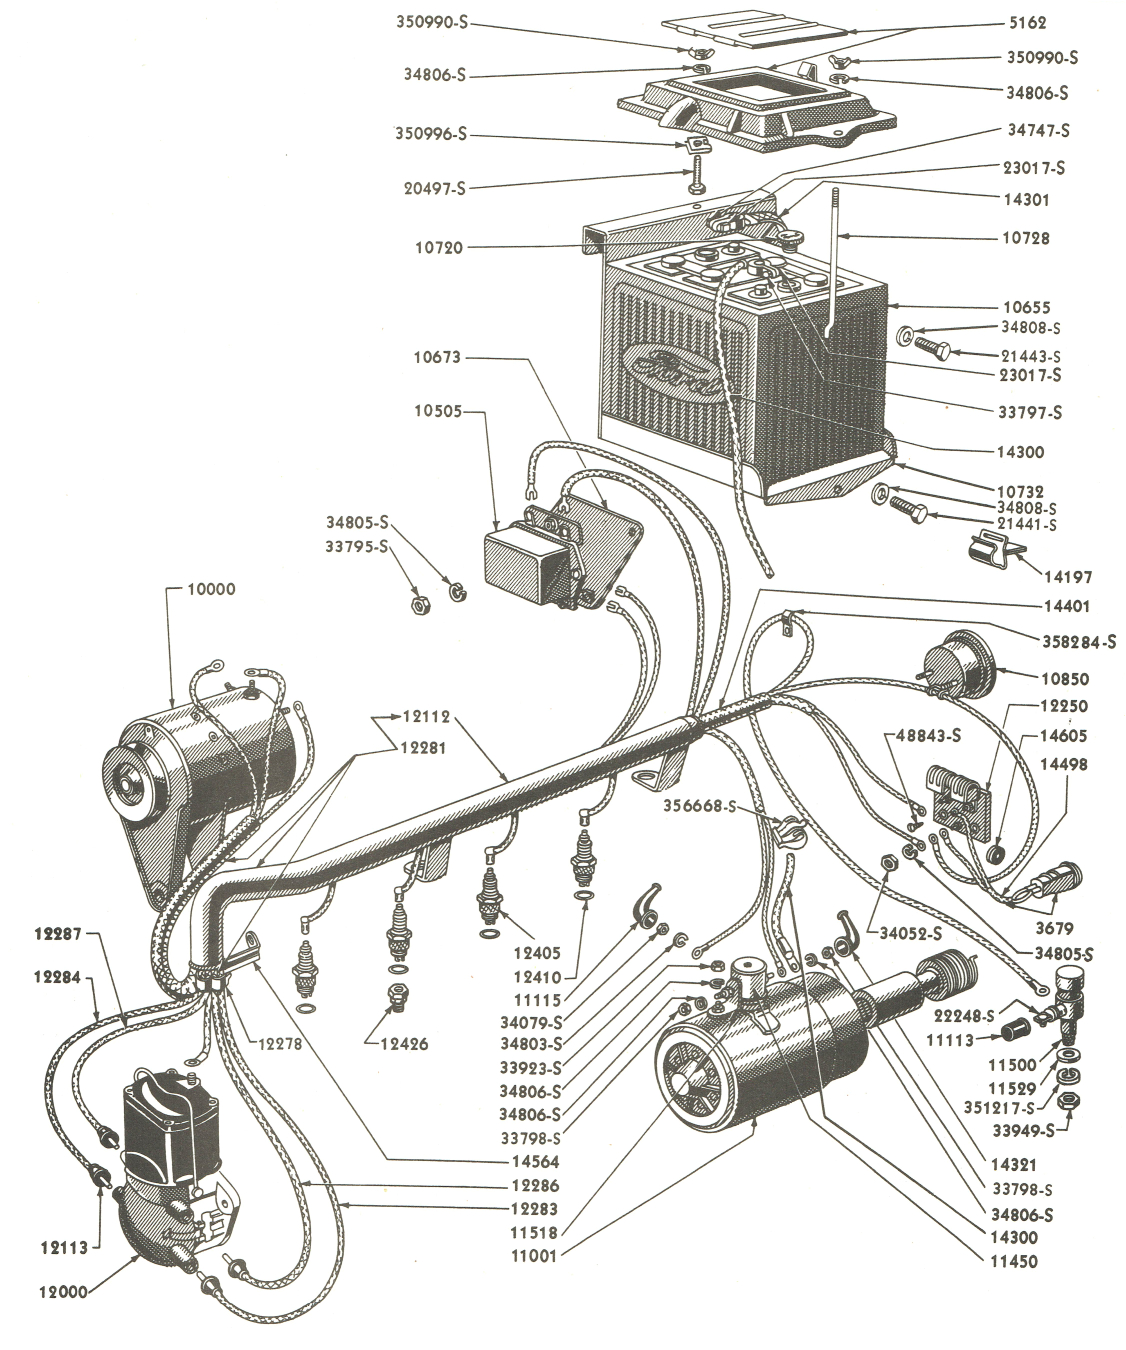 1954 ford 8n wiring harness diagram wiring diagram schema mix ford 8n tractor wiring harness diagram